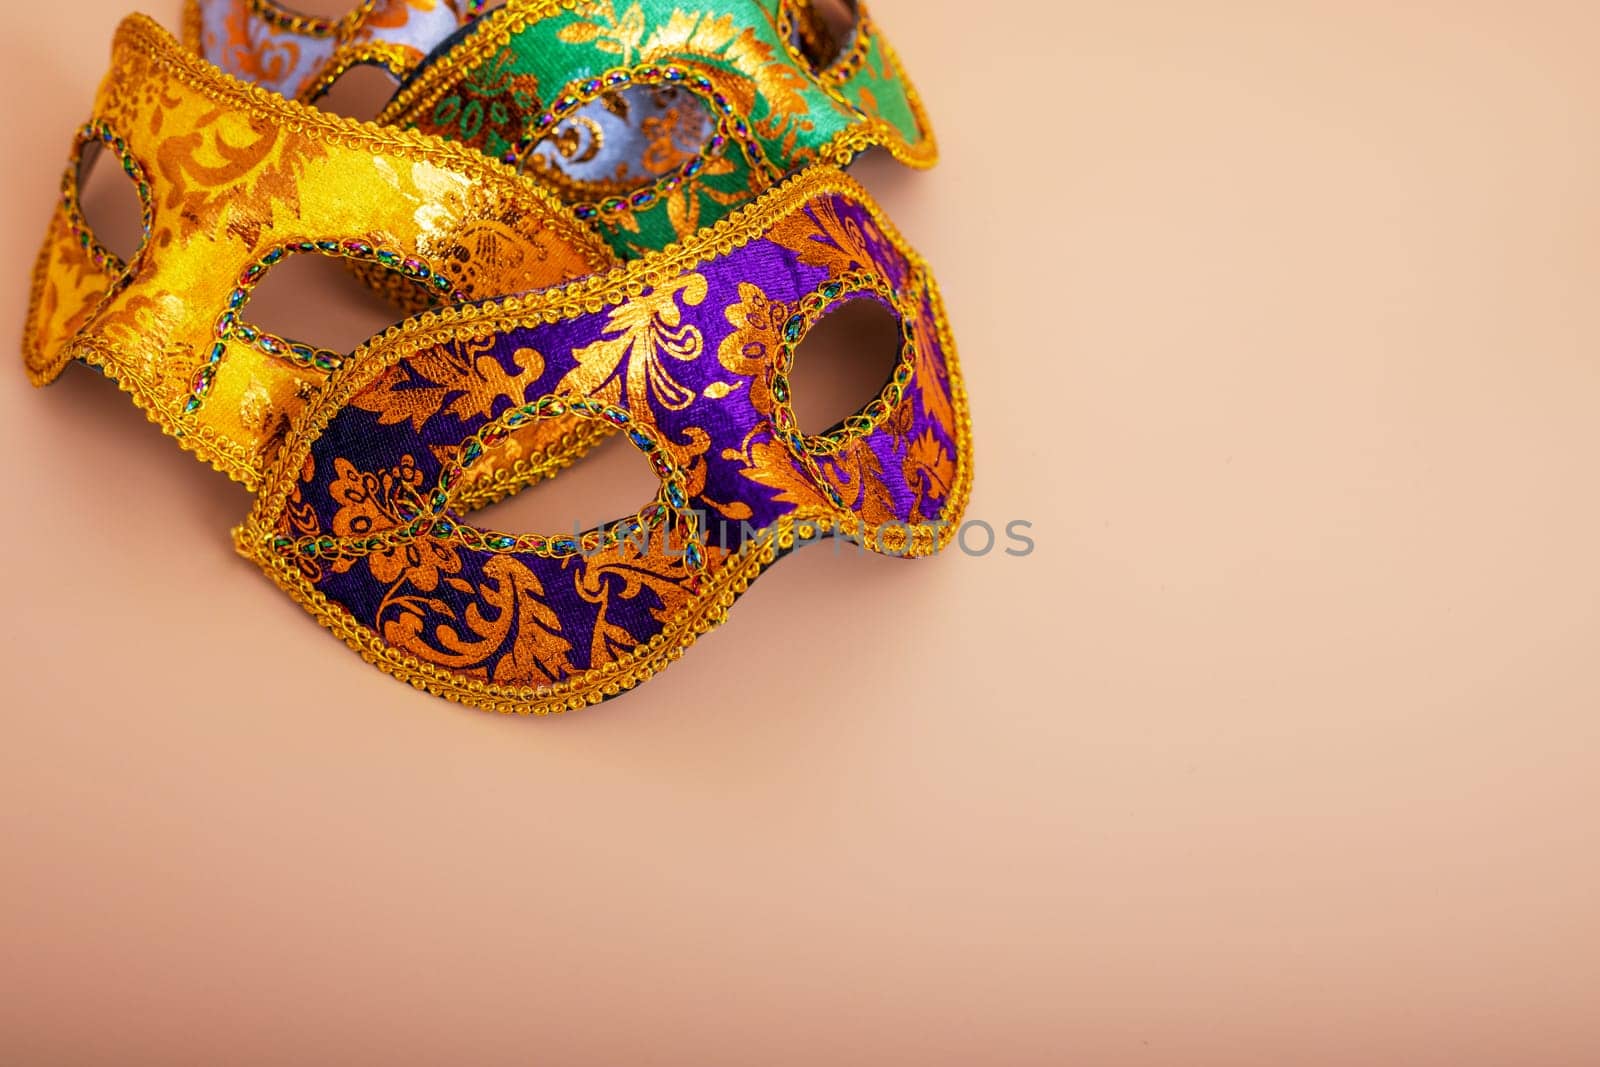 Carnival masks on color background. Purim celebration concept by andreyz